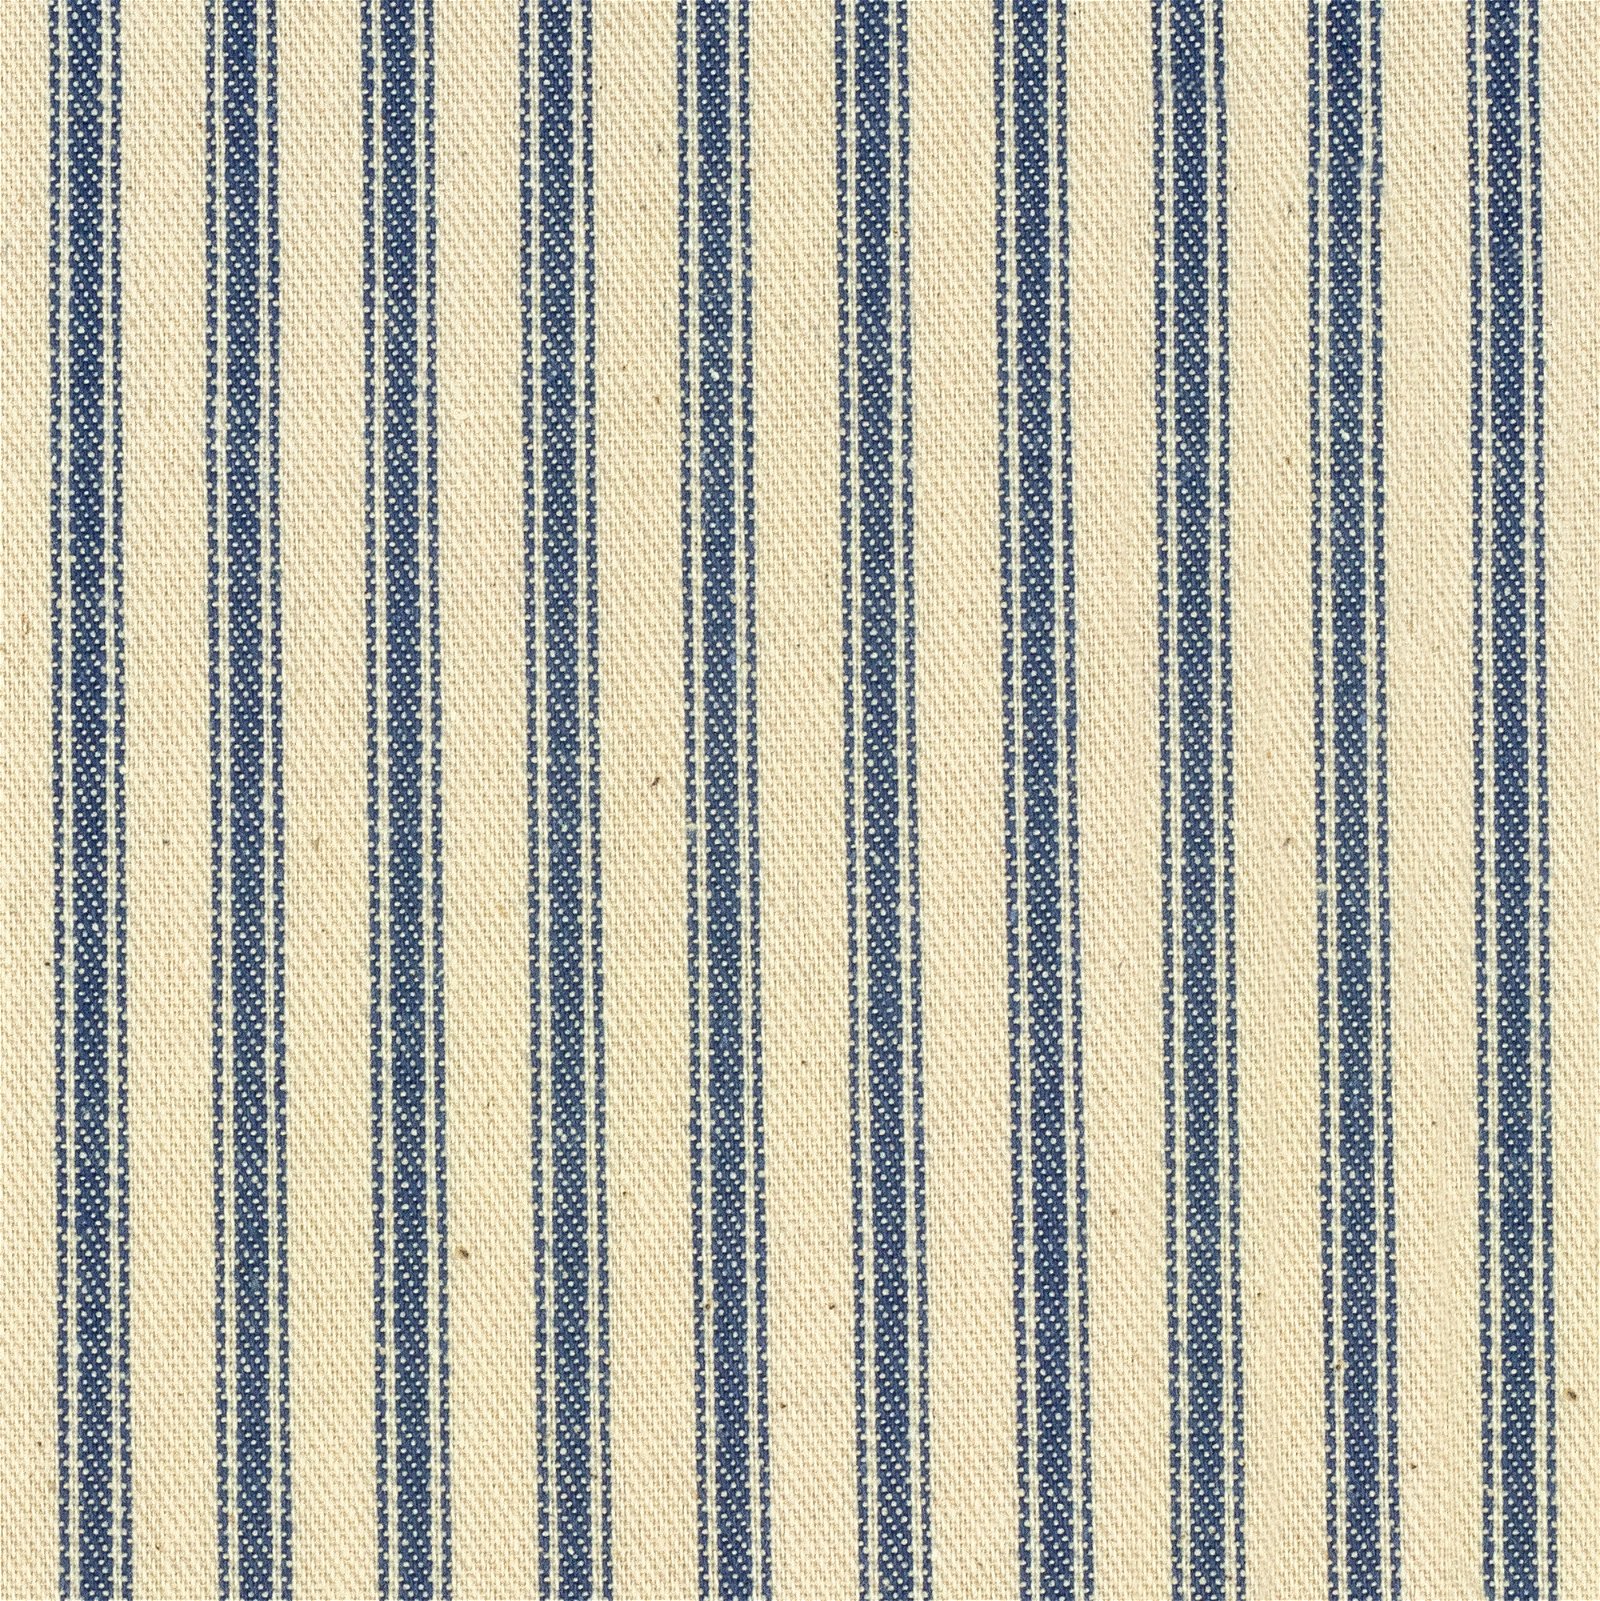 45 ACA Blue Ticking Fabric